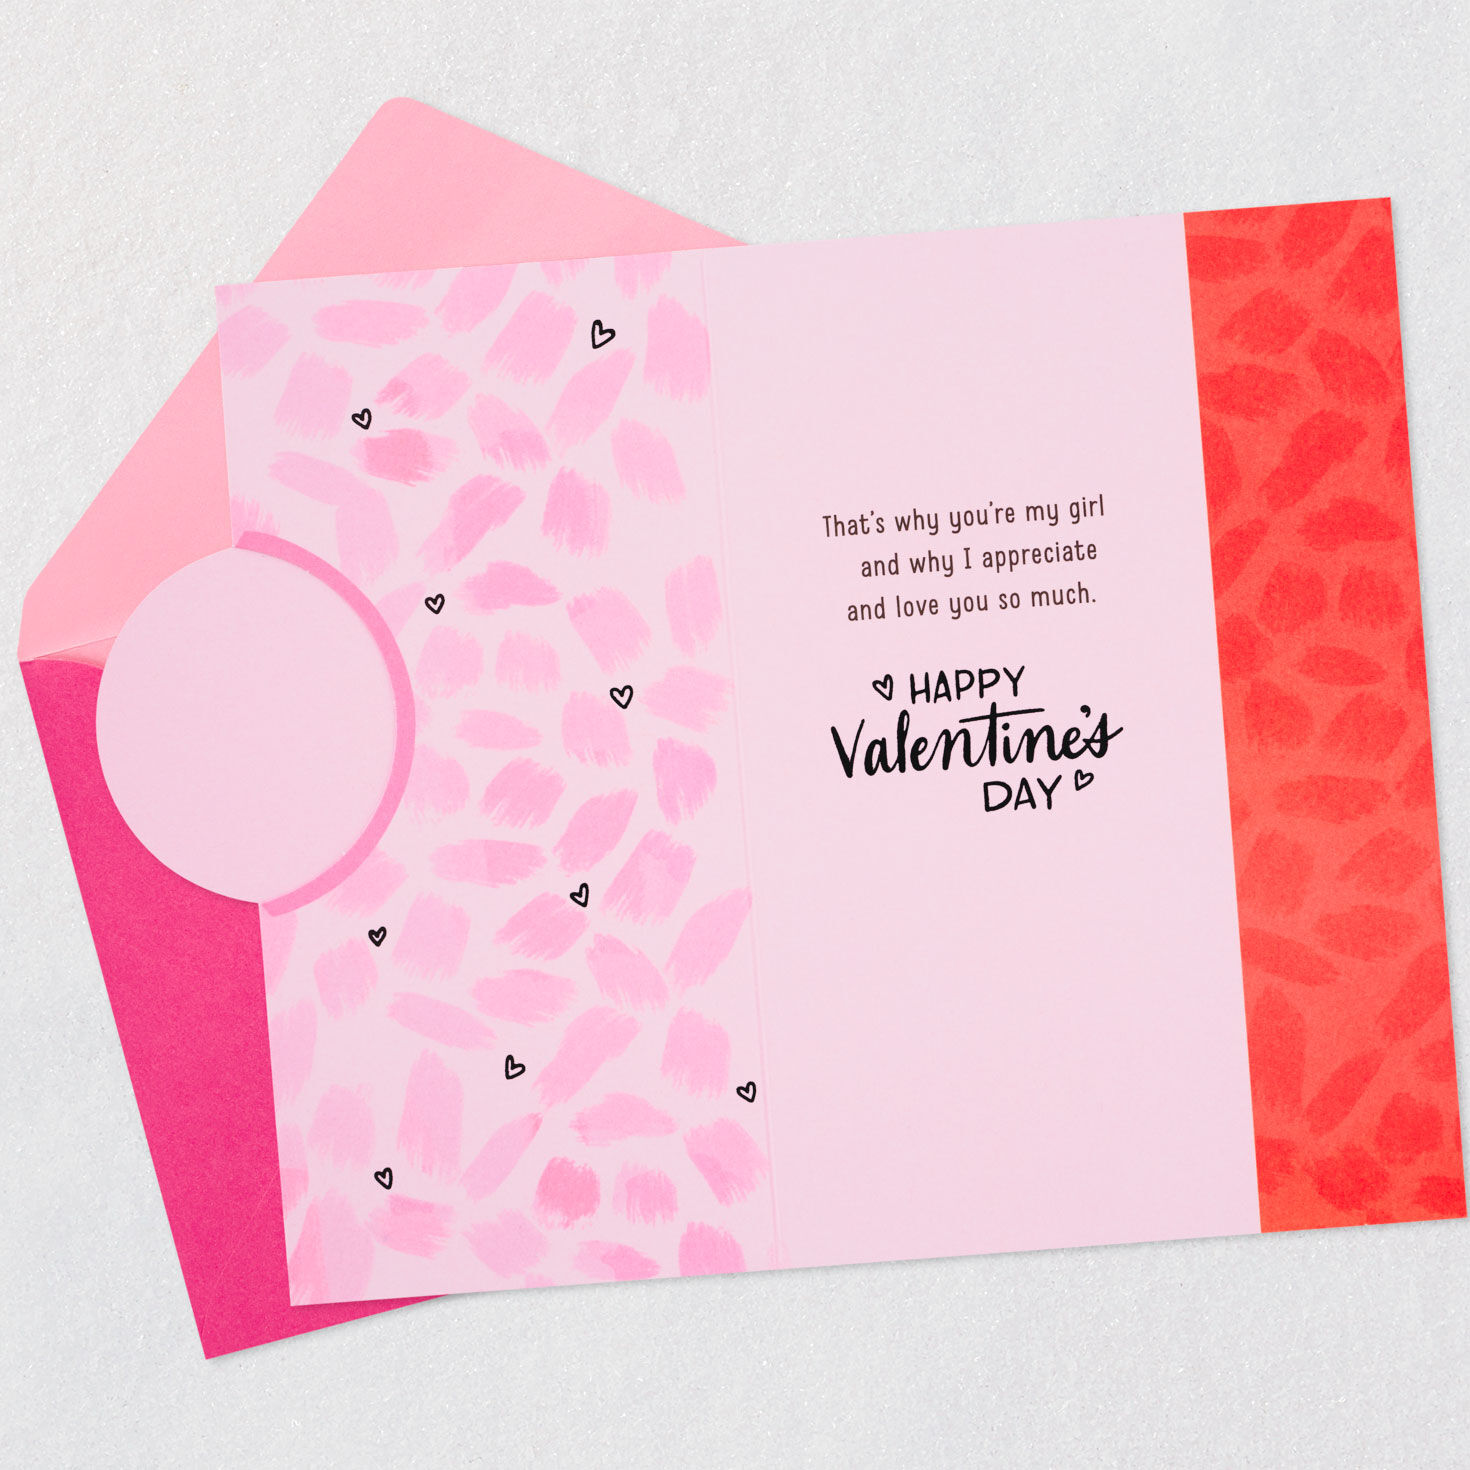 New For Friend Hallmark Valentine's Day Card with envelope